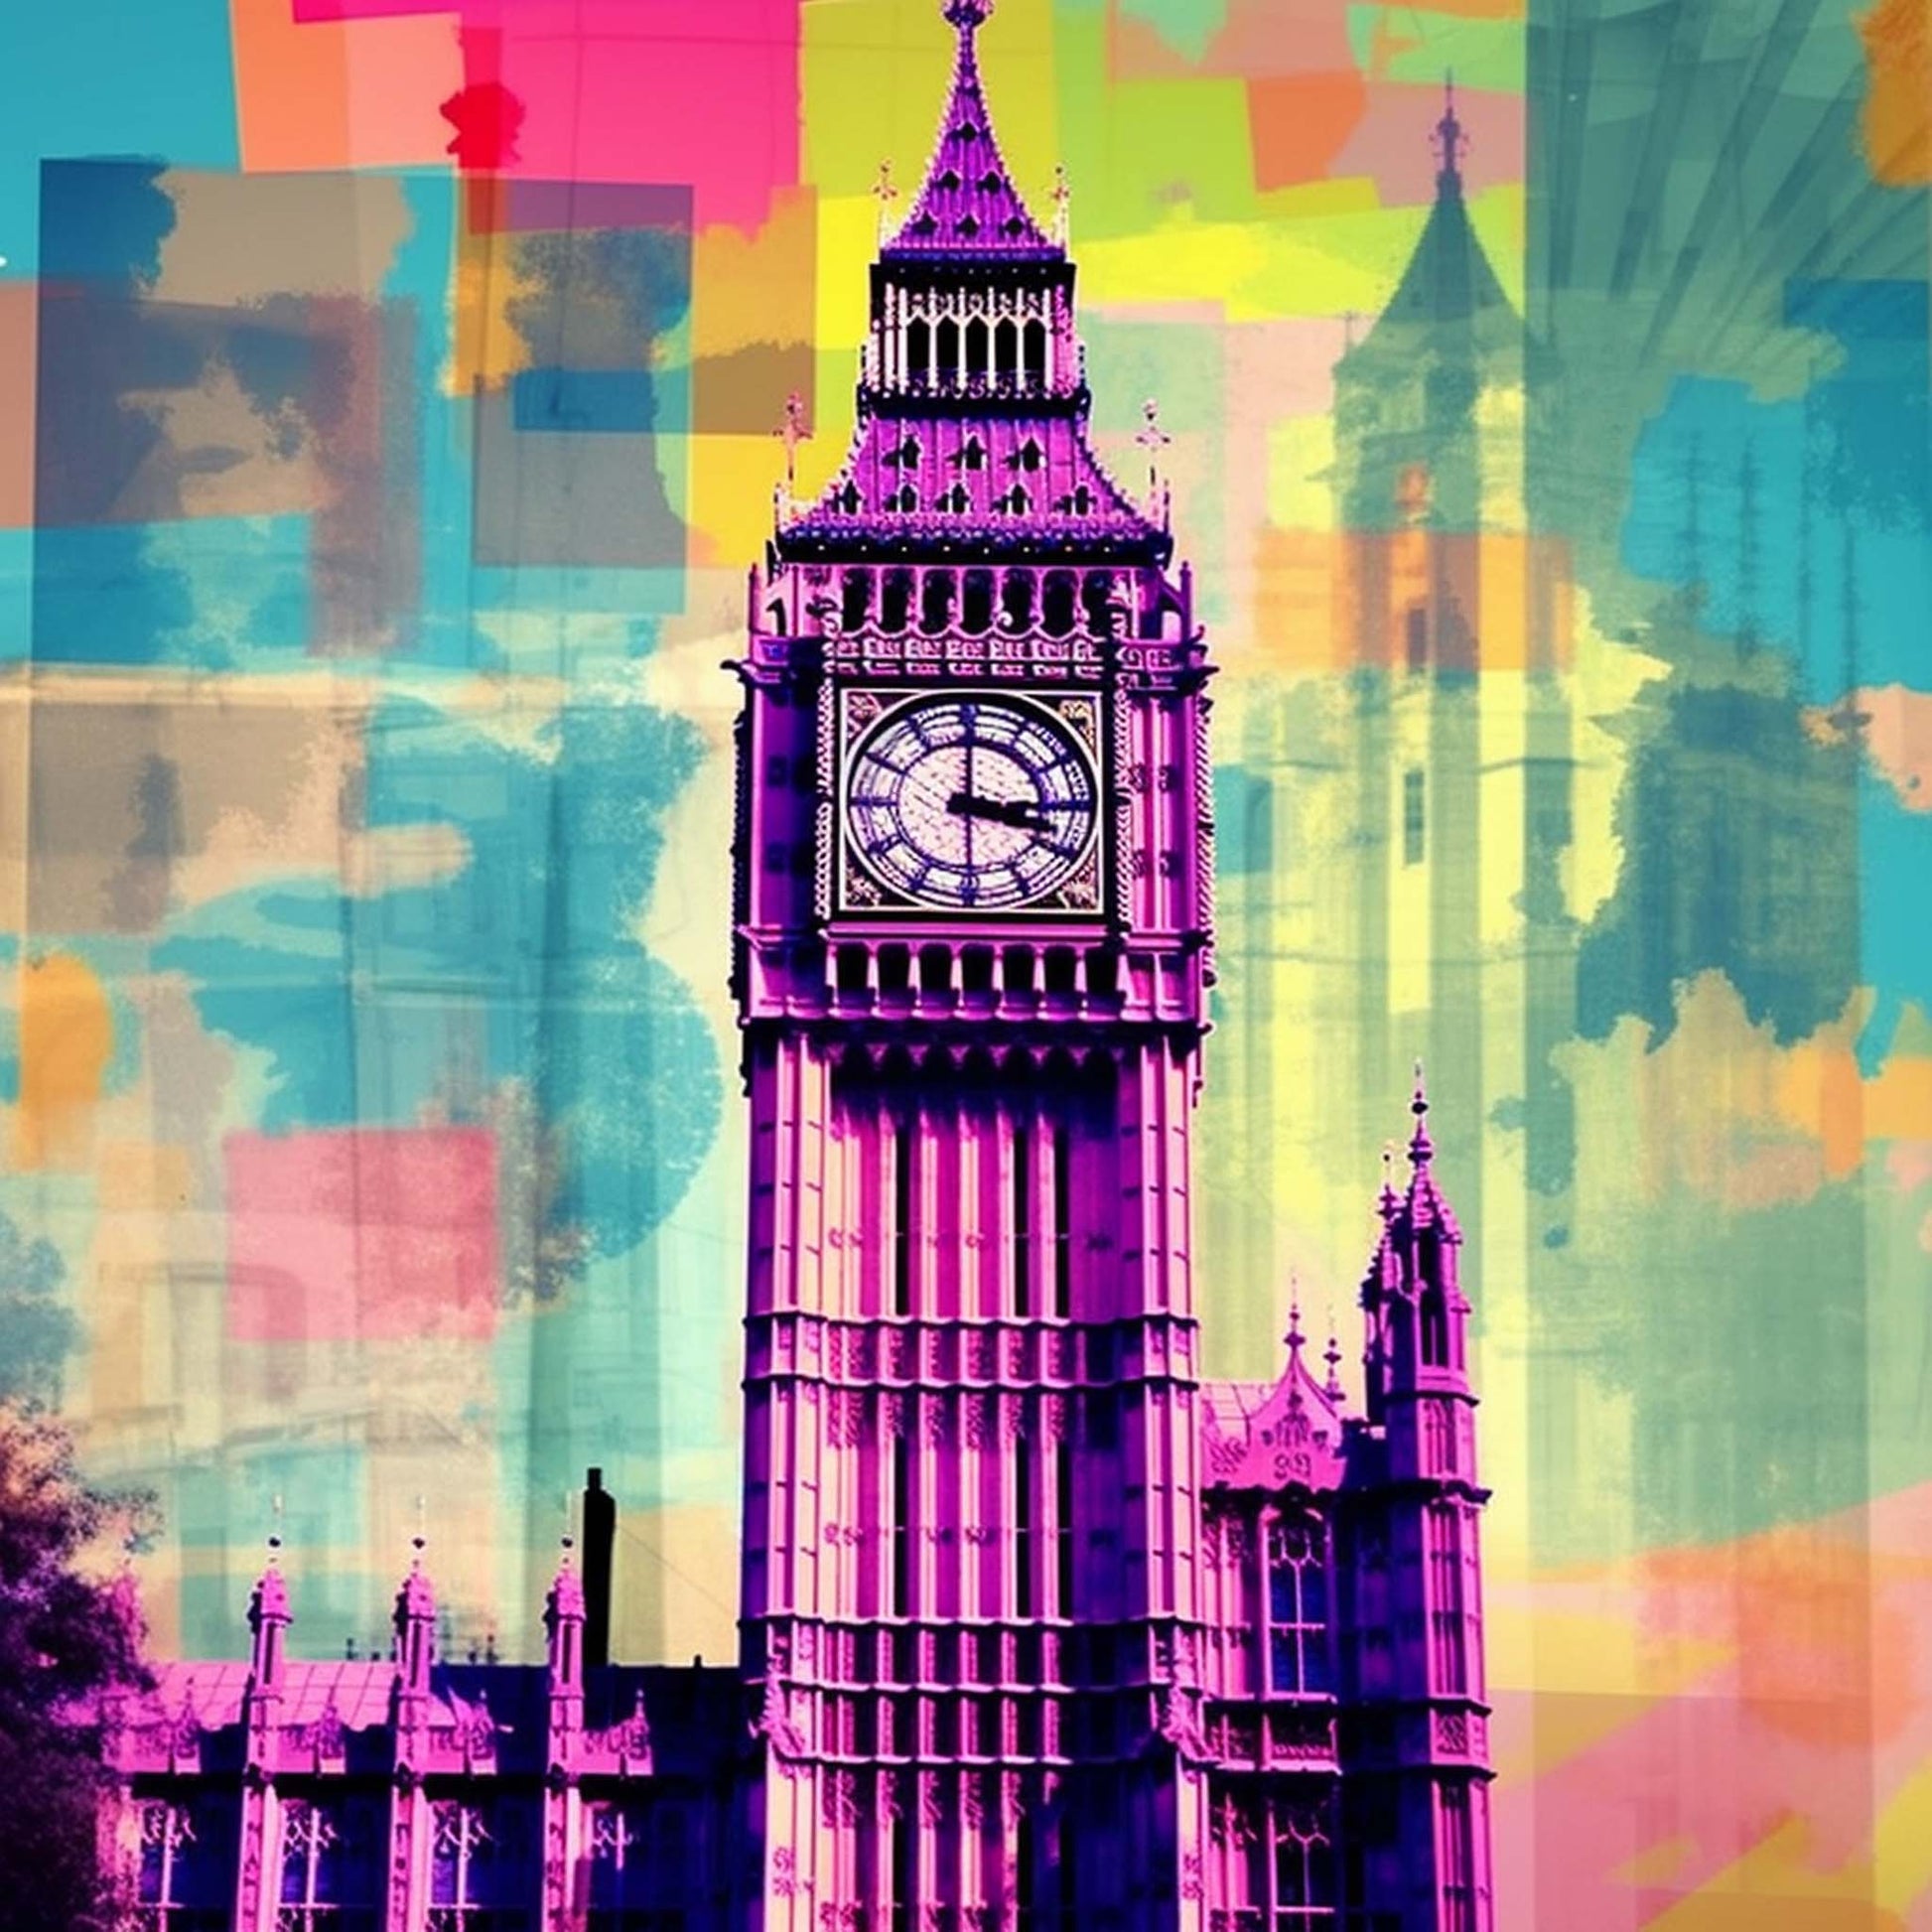 Urbanisto - London Westminster Palace - Wandbild in der Stilrichtung der Pop-Art